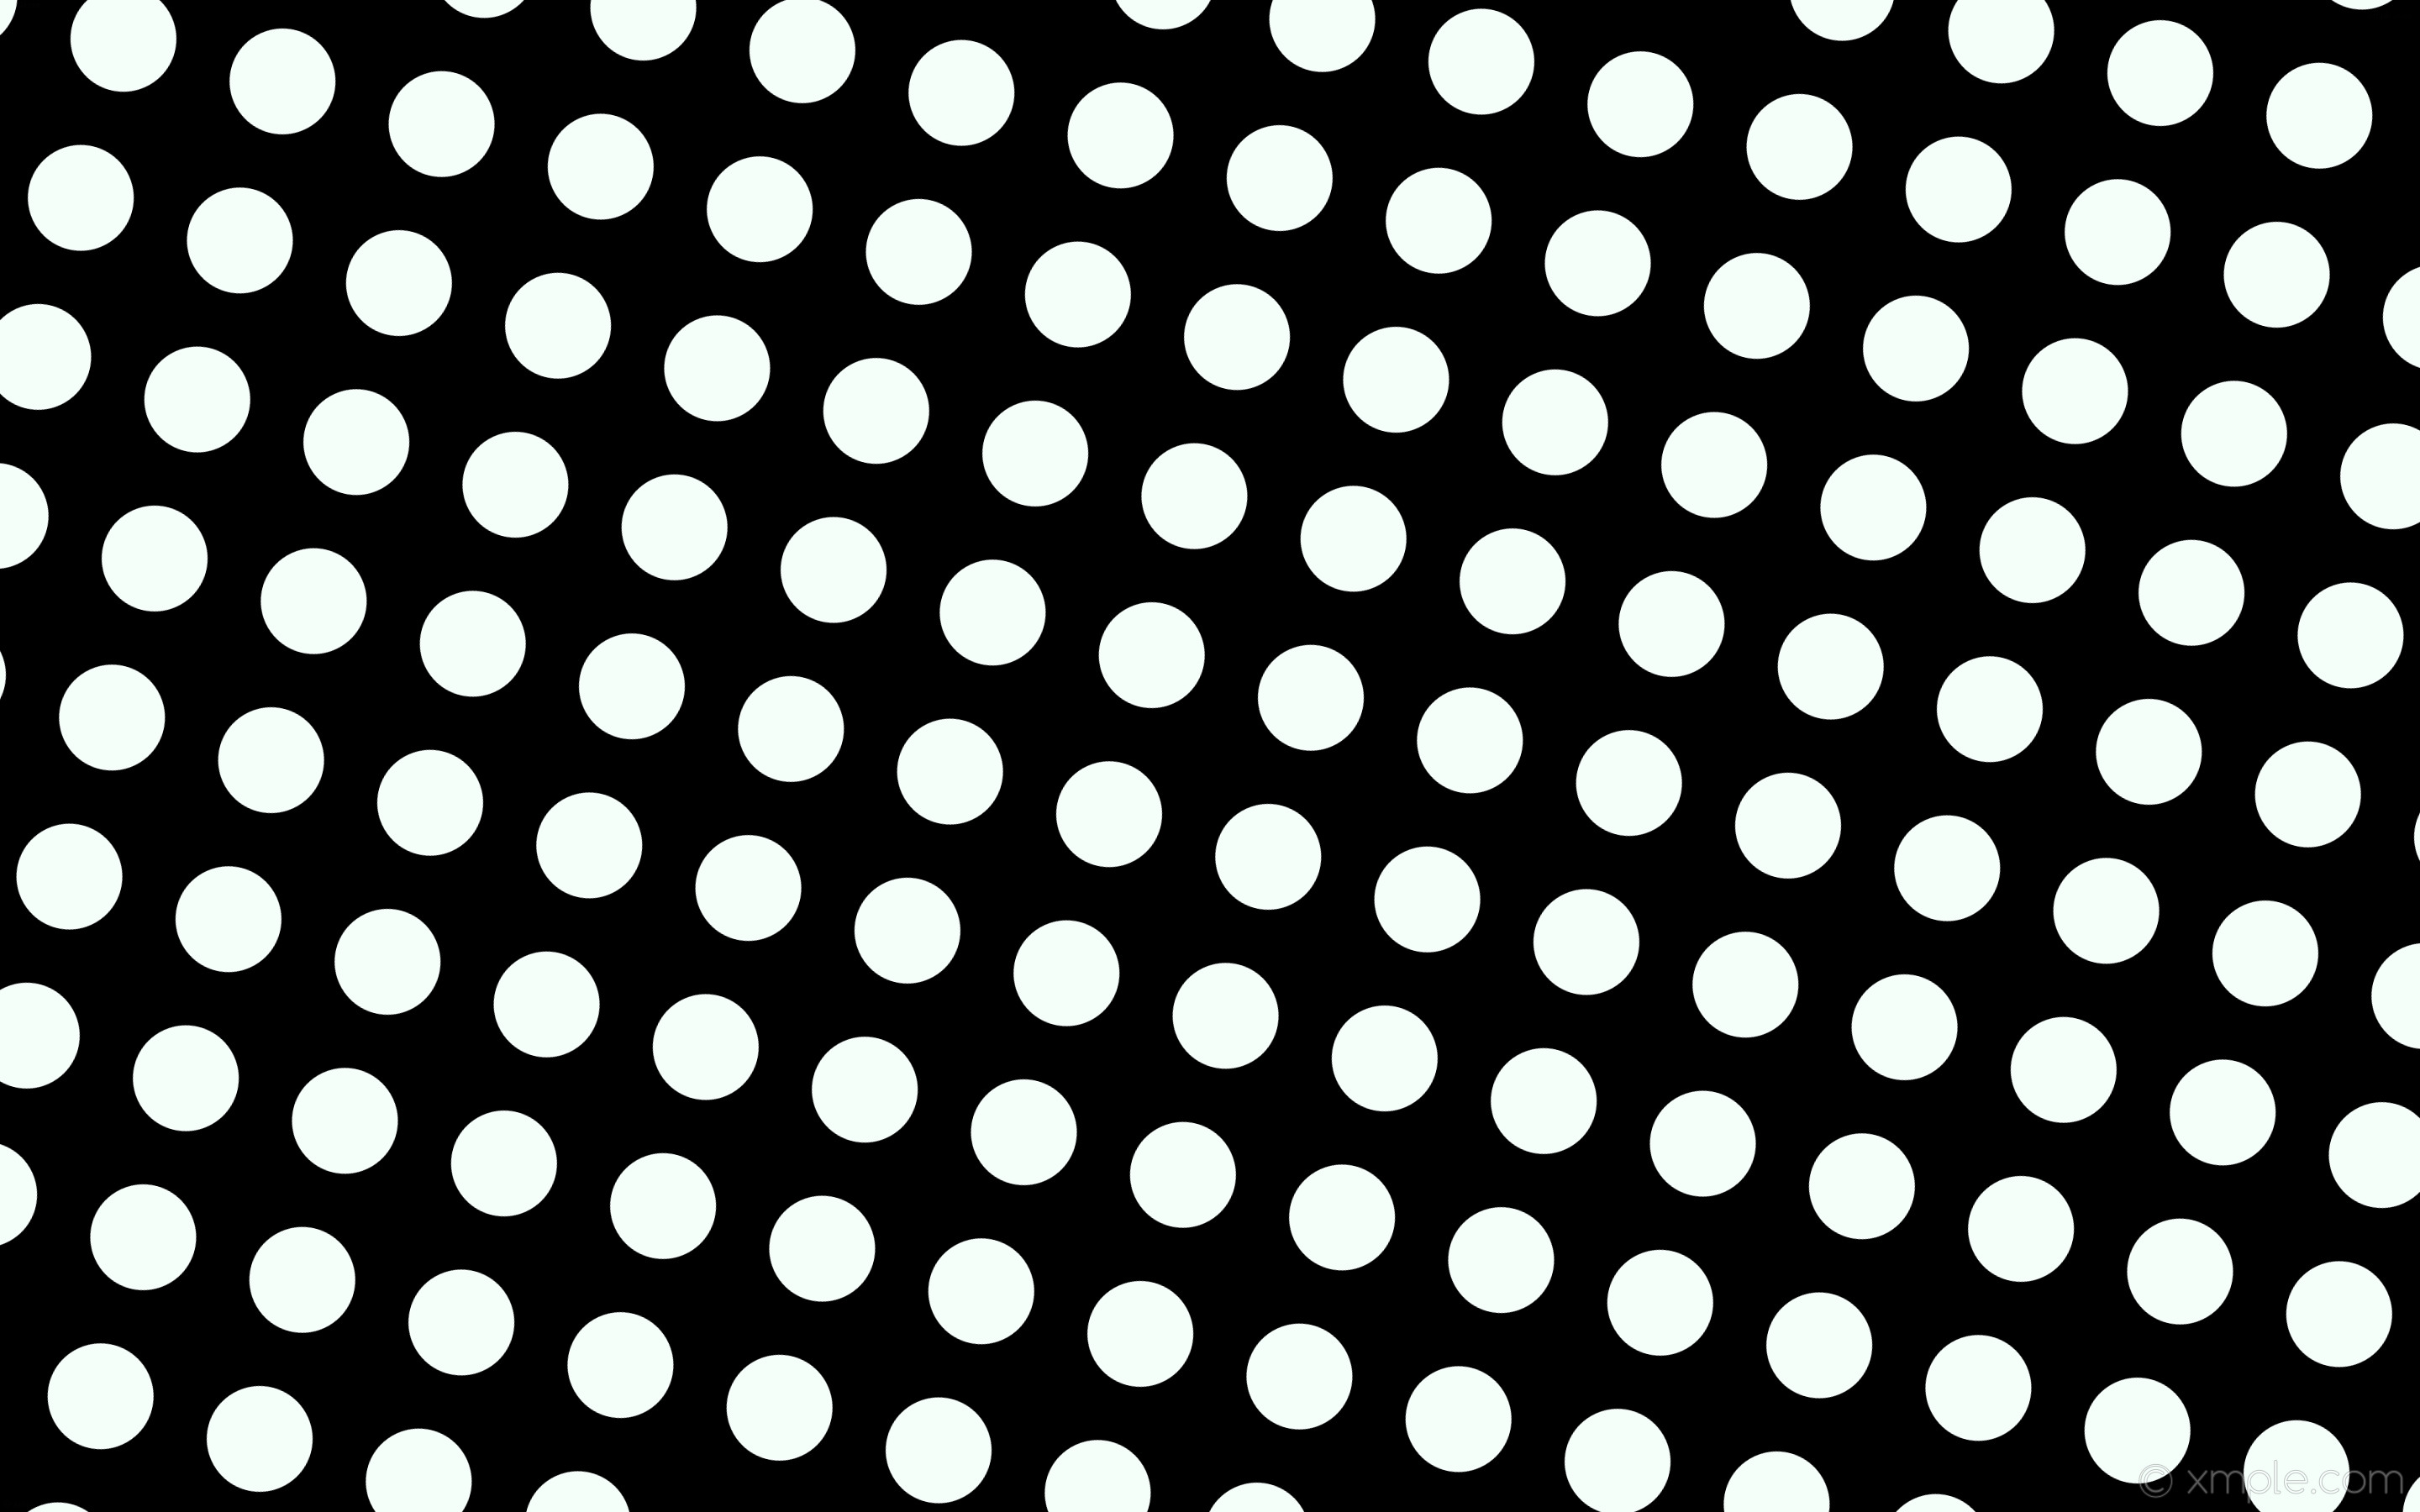 wallpaper white black spots polka dots mint cream #000000 #f5fffa 345Â°  126px 196px